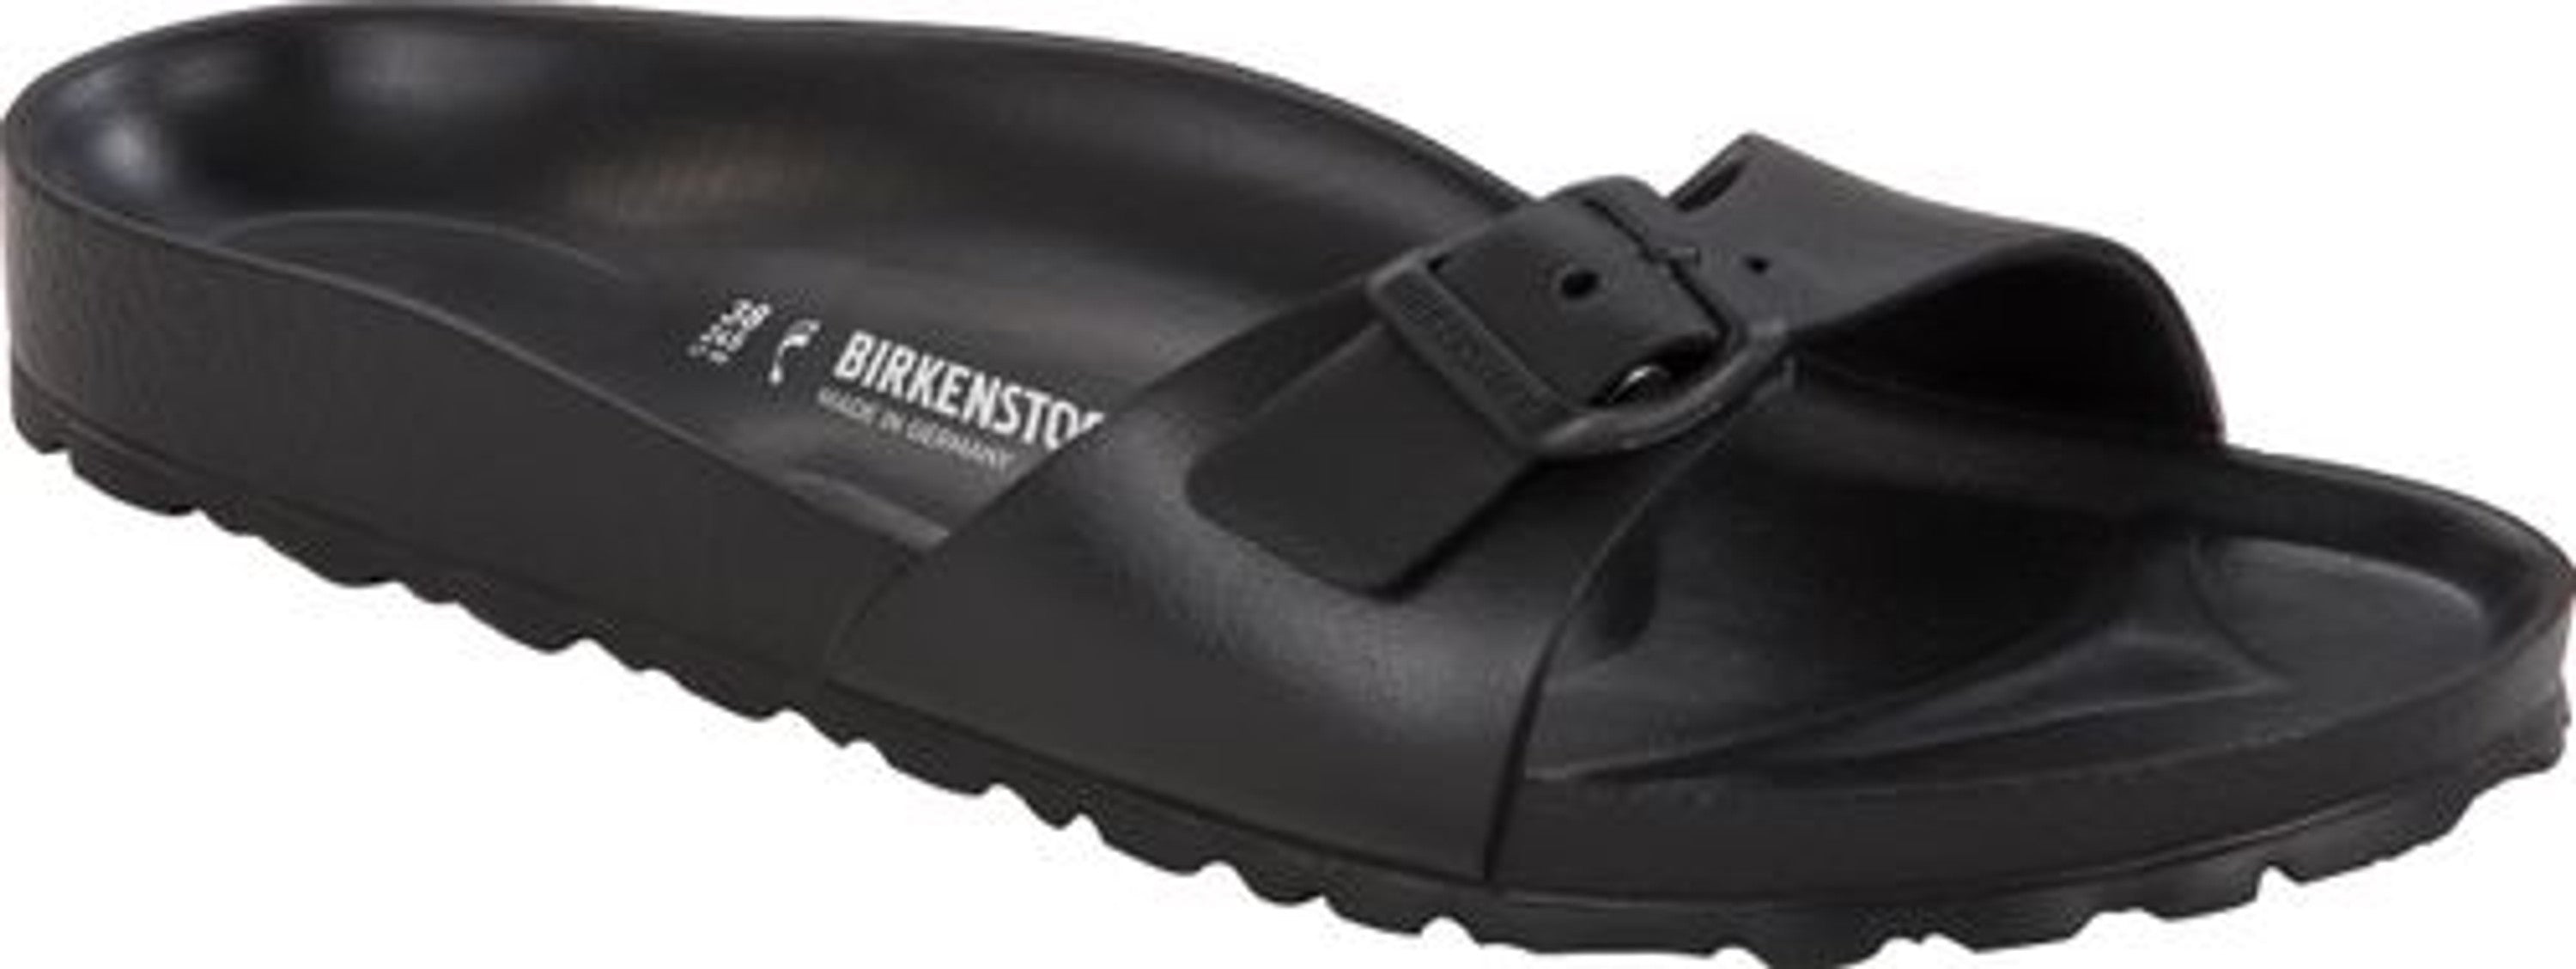 Birkenstock Madrid EVA black synthetic - Bartel-Shop